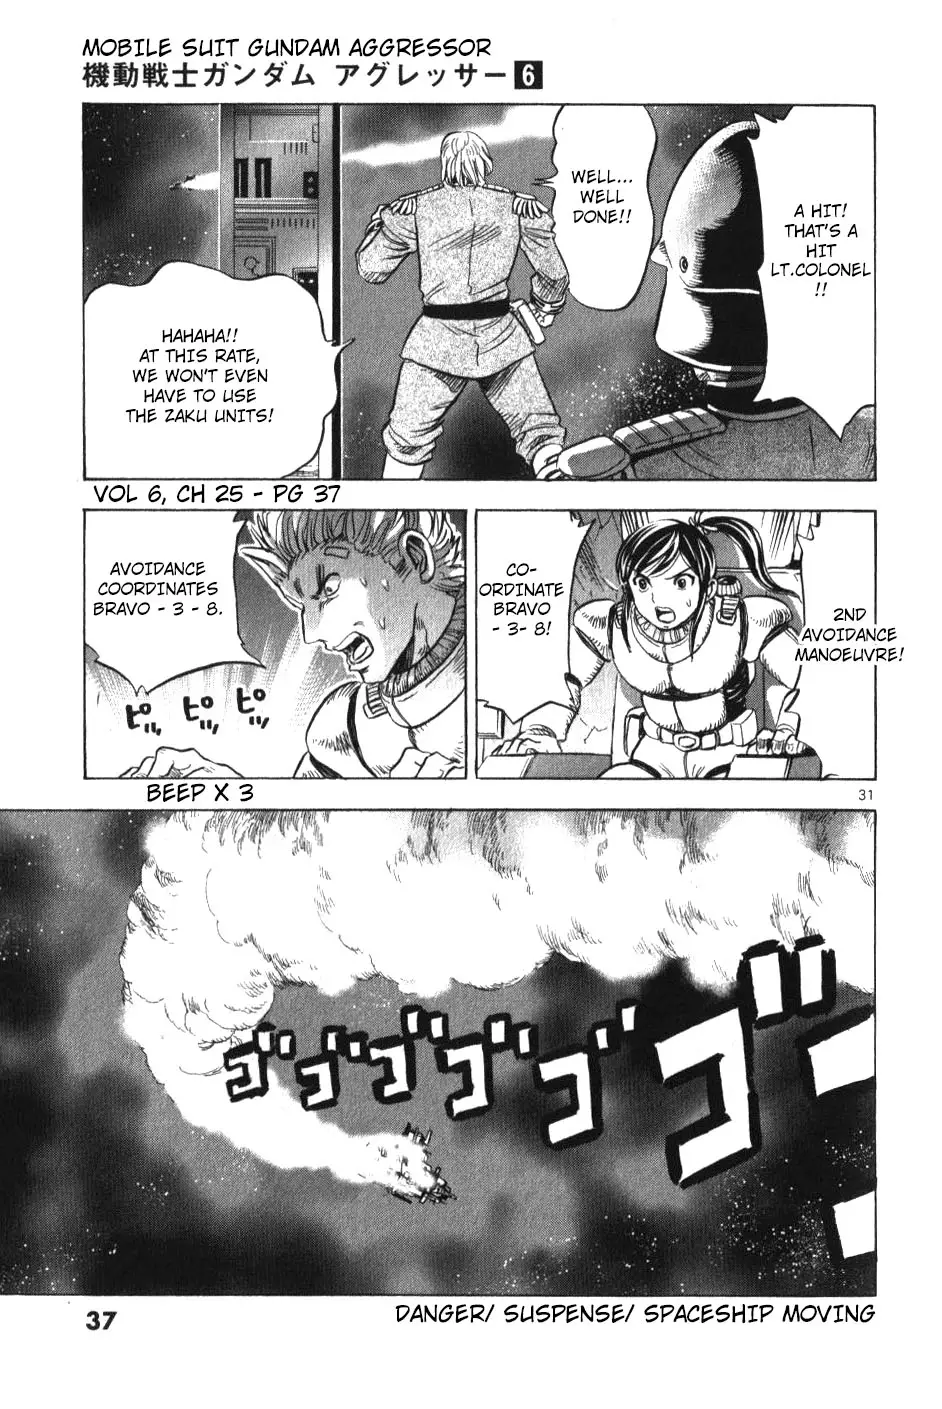 Mobile Suit Gundam Aggressor - 25 page 31-cad93589